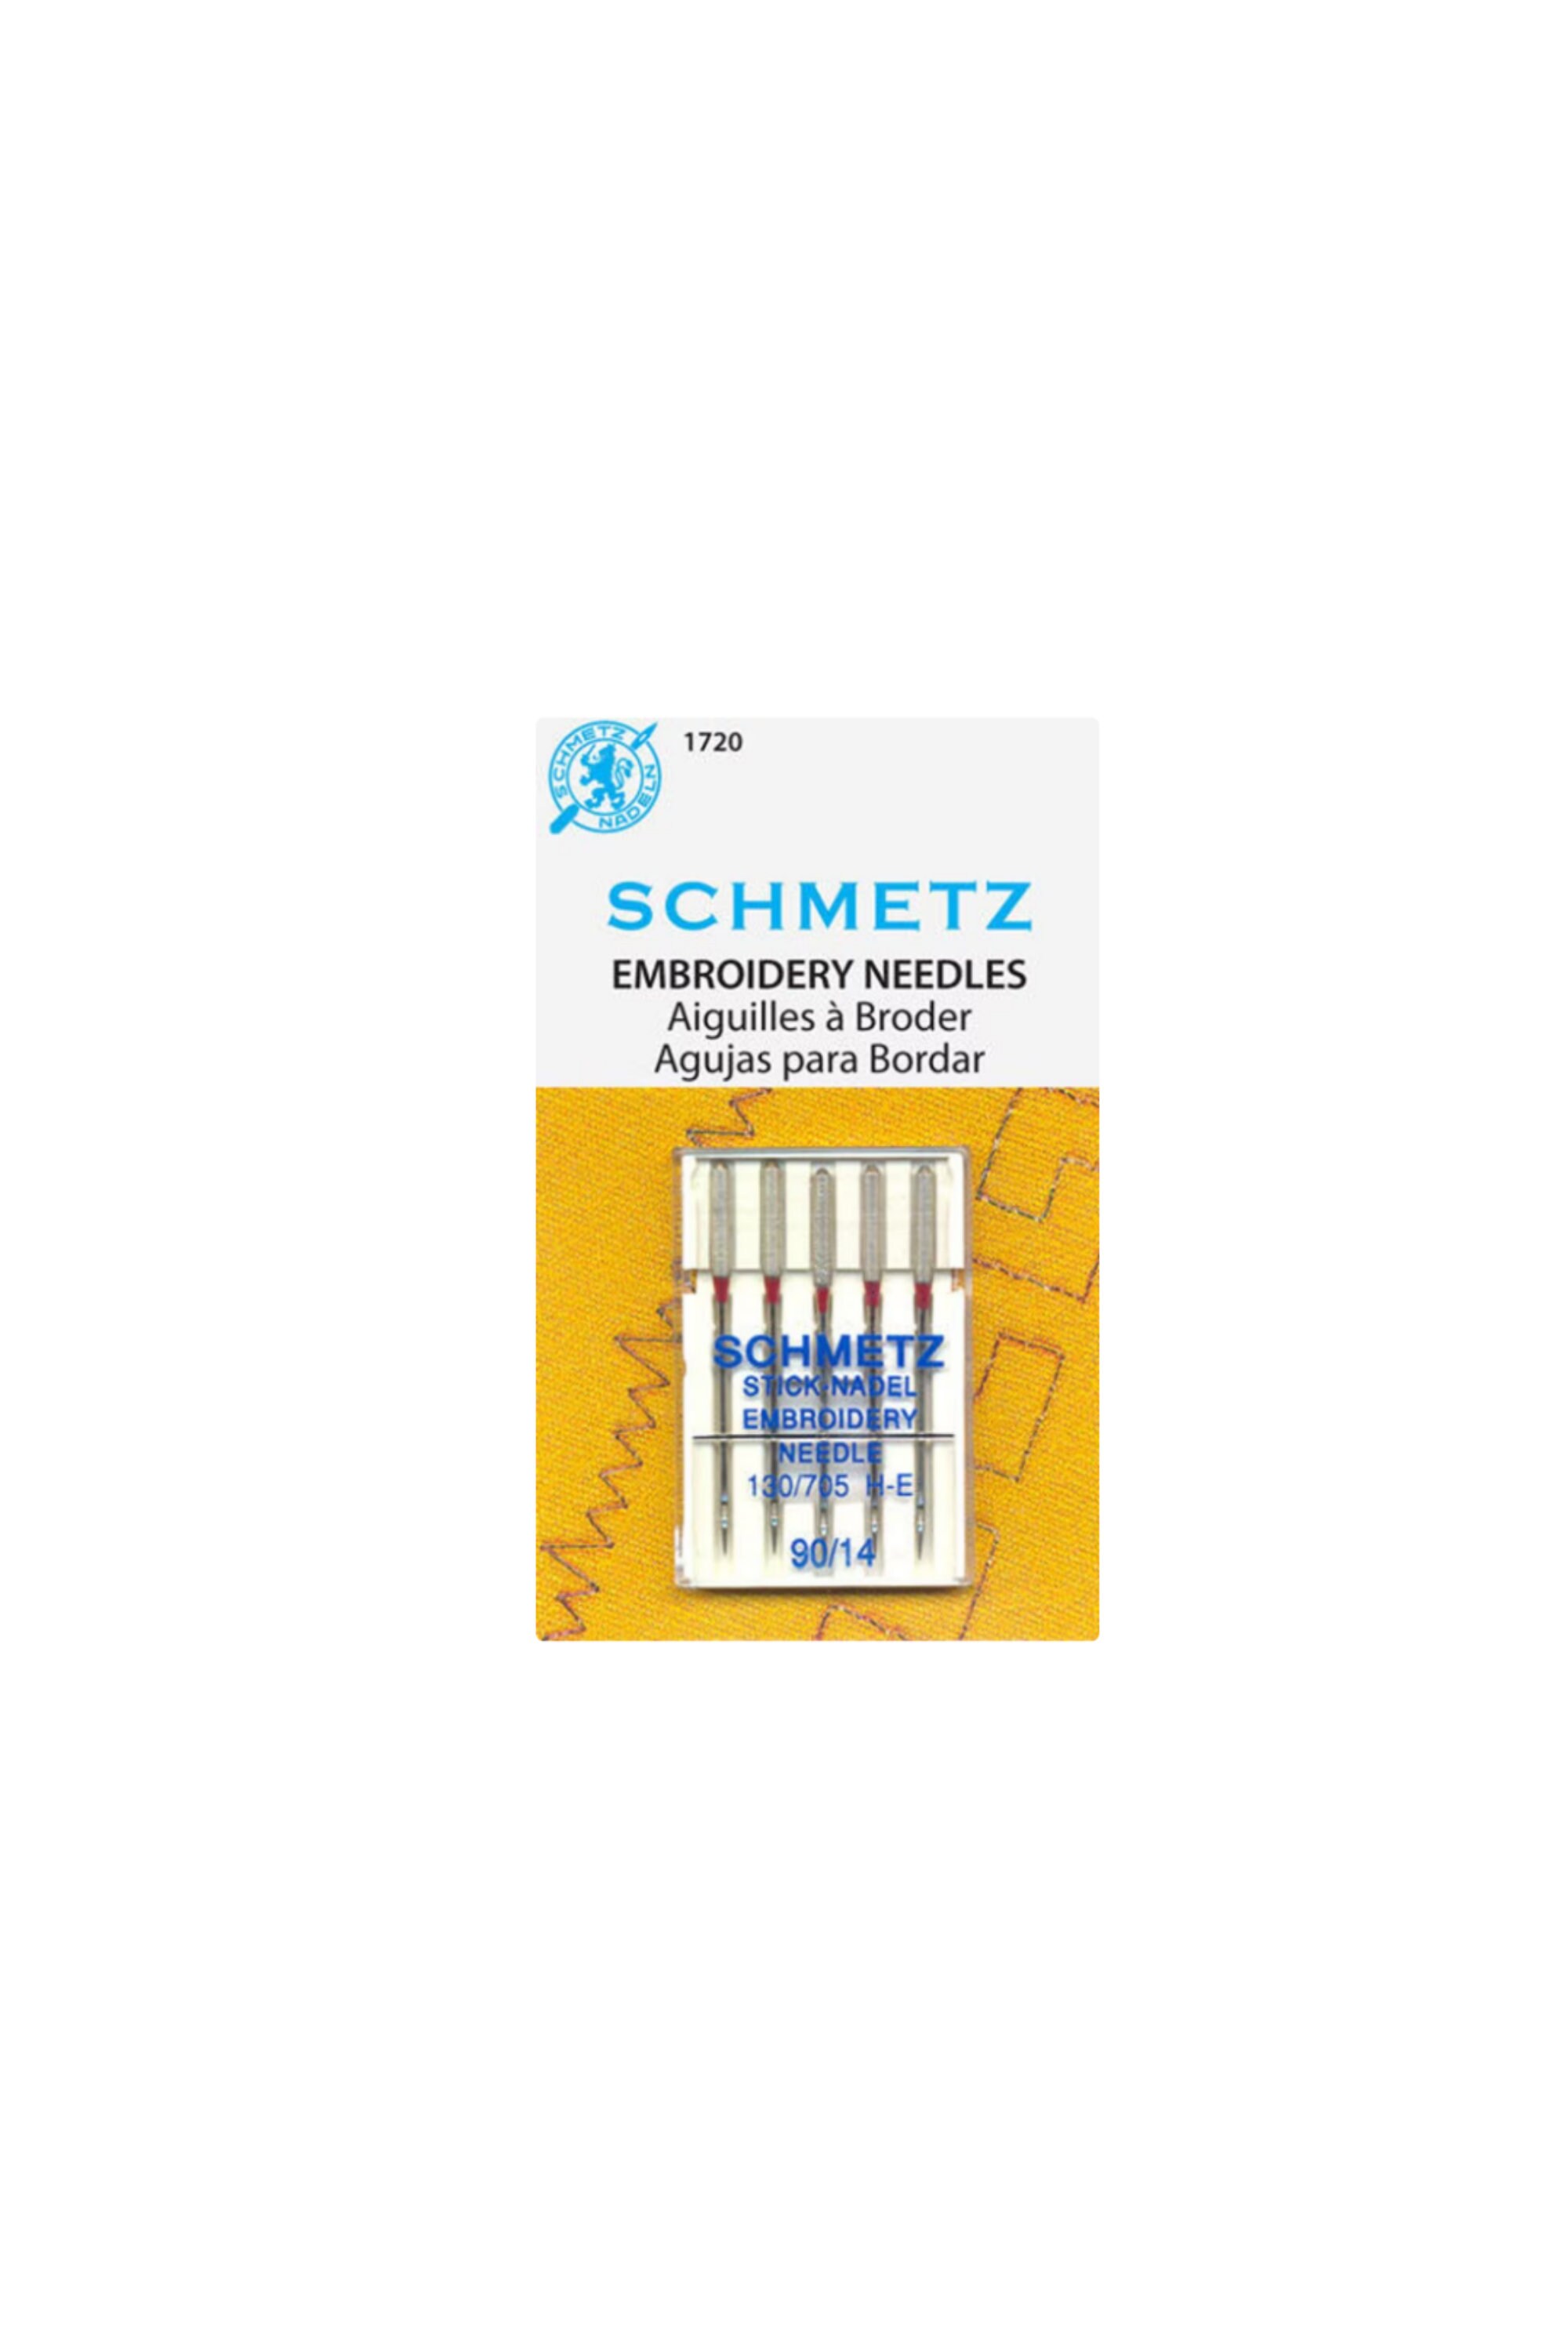 Schmetz Schmetz 1720 Embroidery Needles, Size 14/90 - 5 count